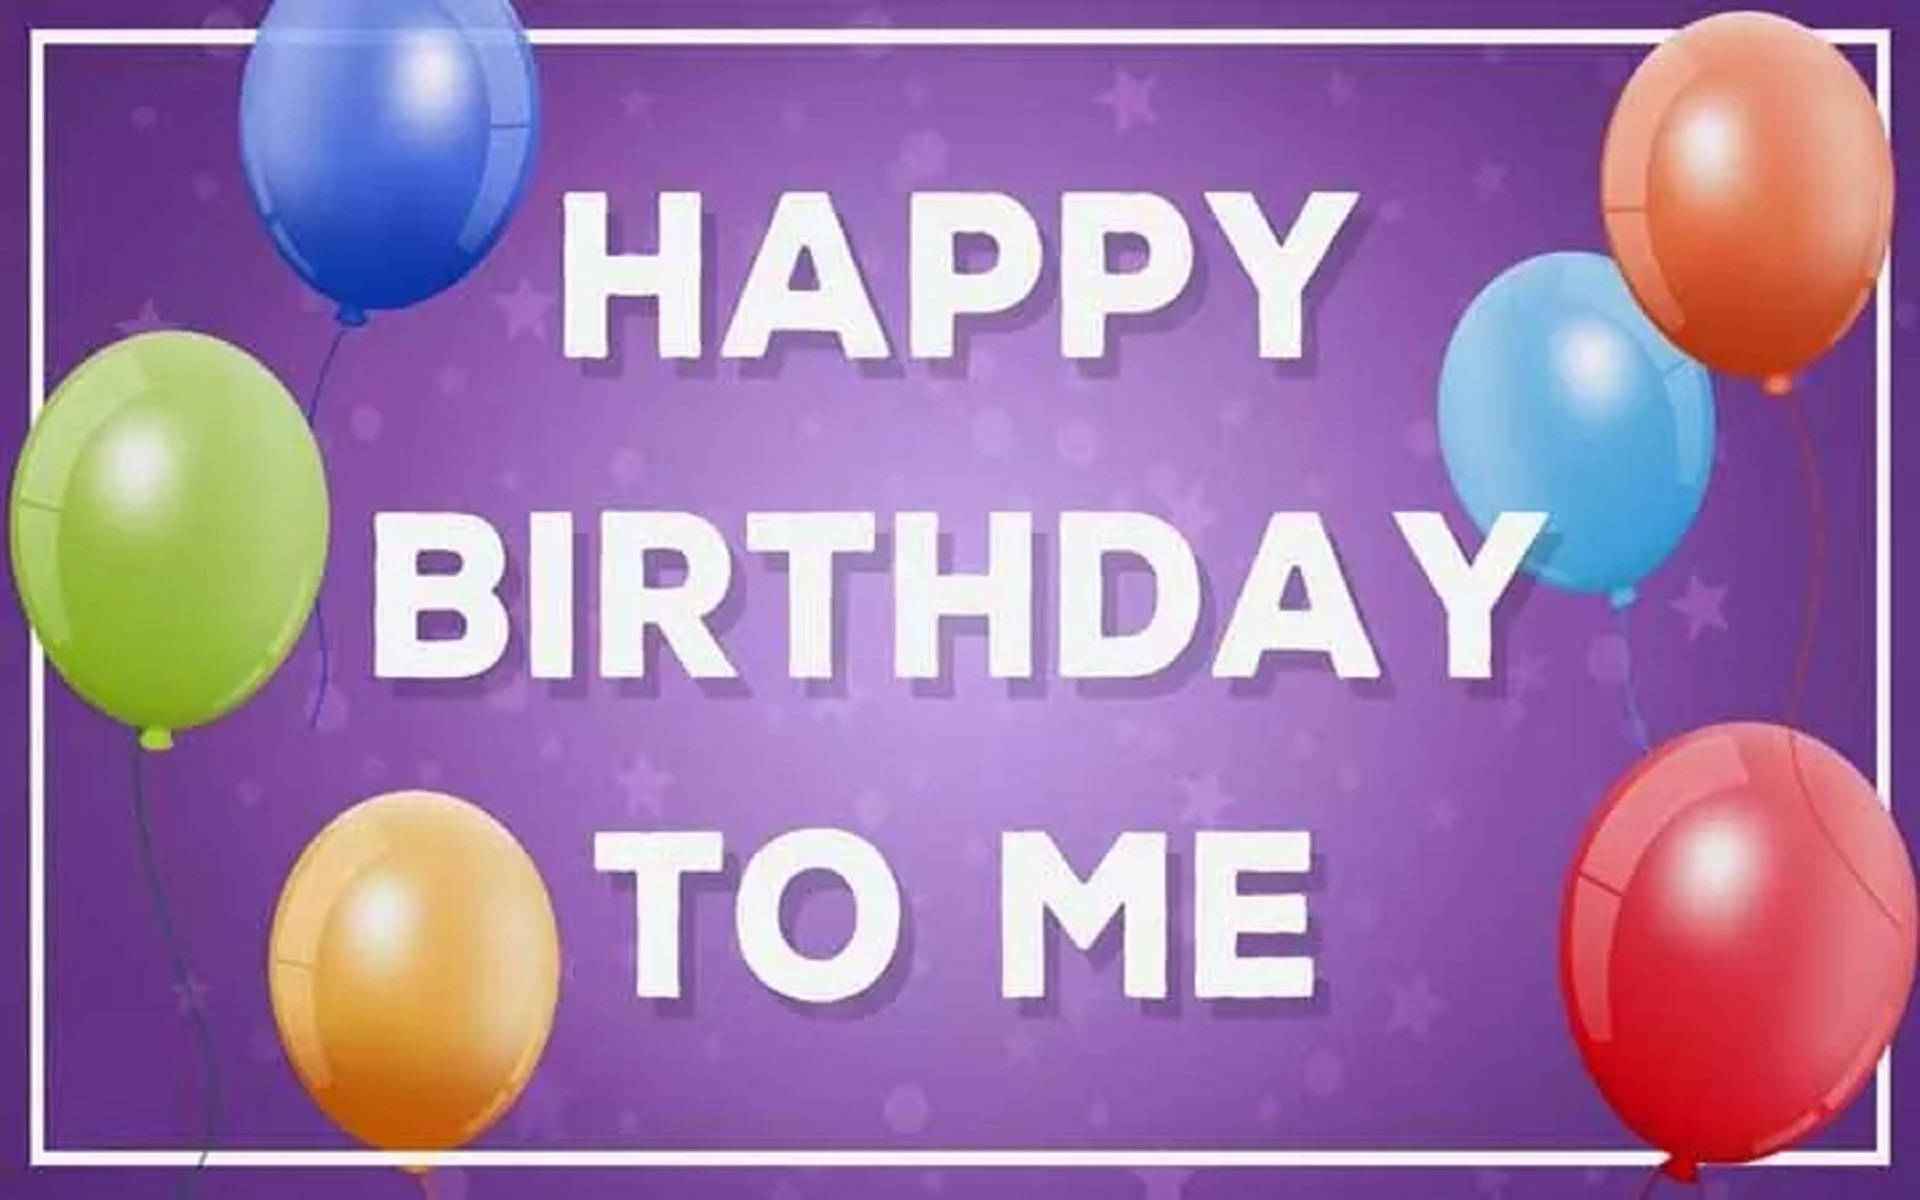 Happy Birthday To Me In Purple